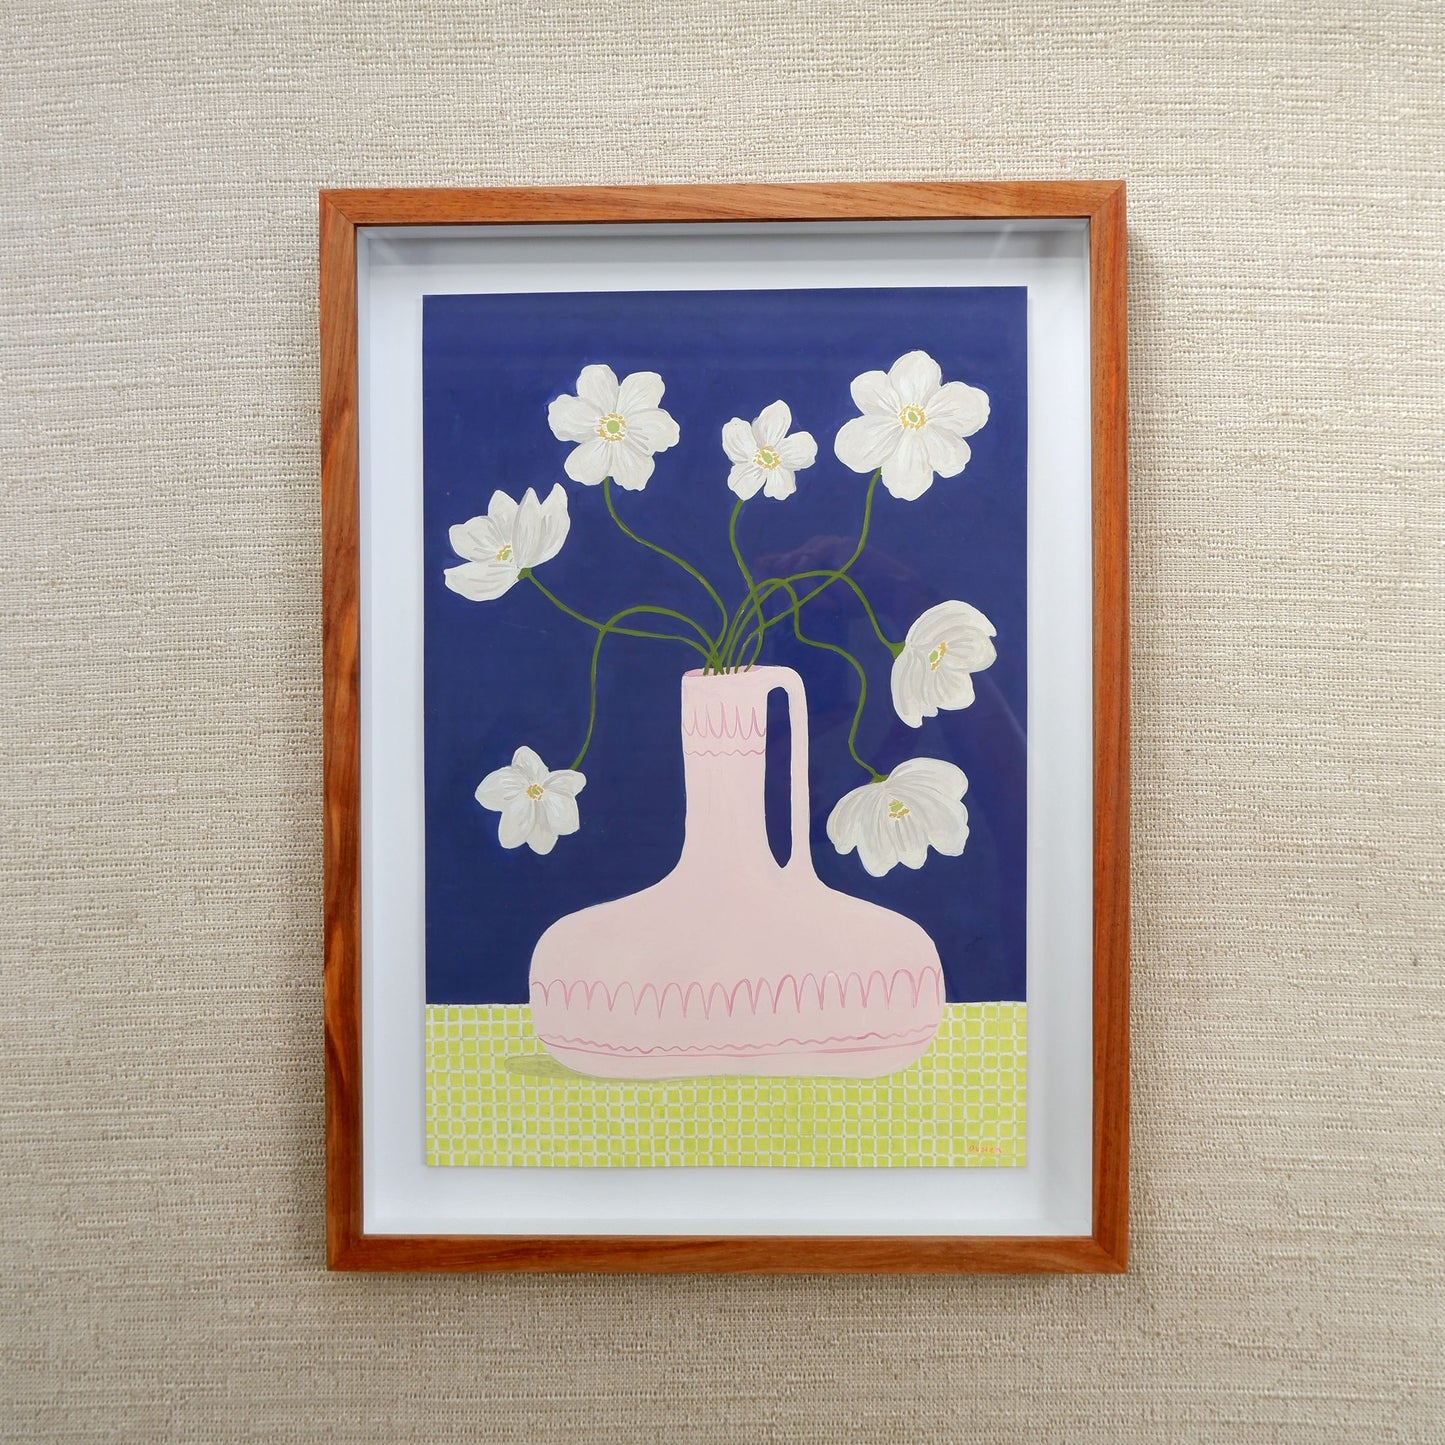 In Bloom (framed)